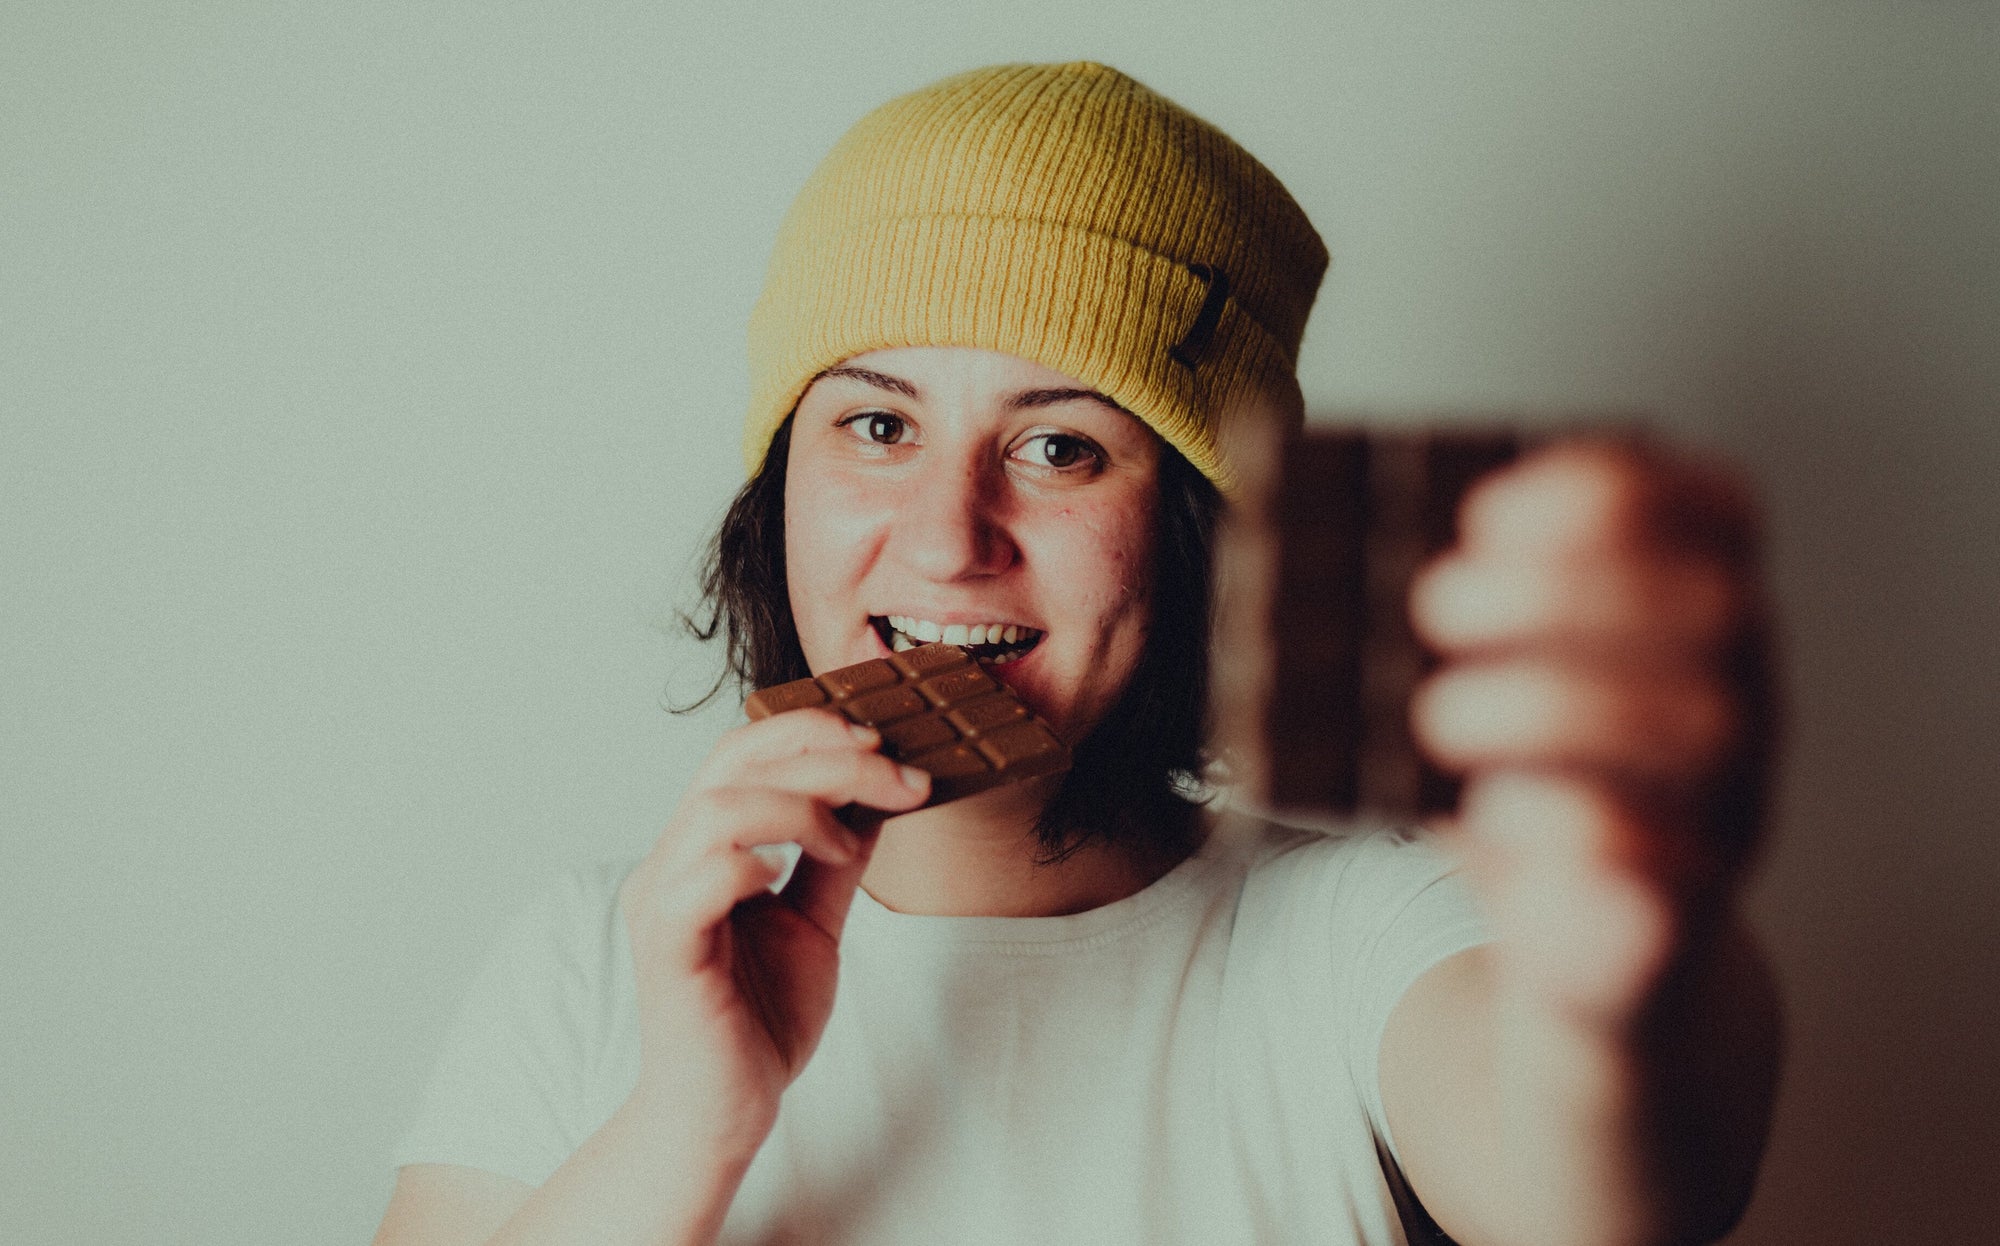 A girl eating chocolate